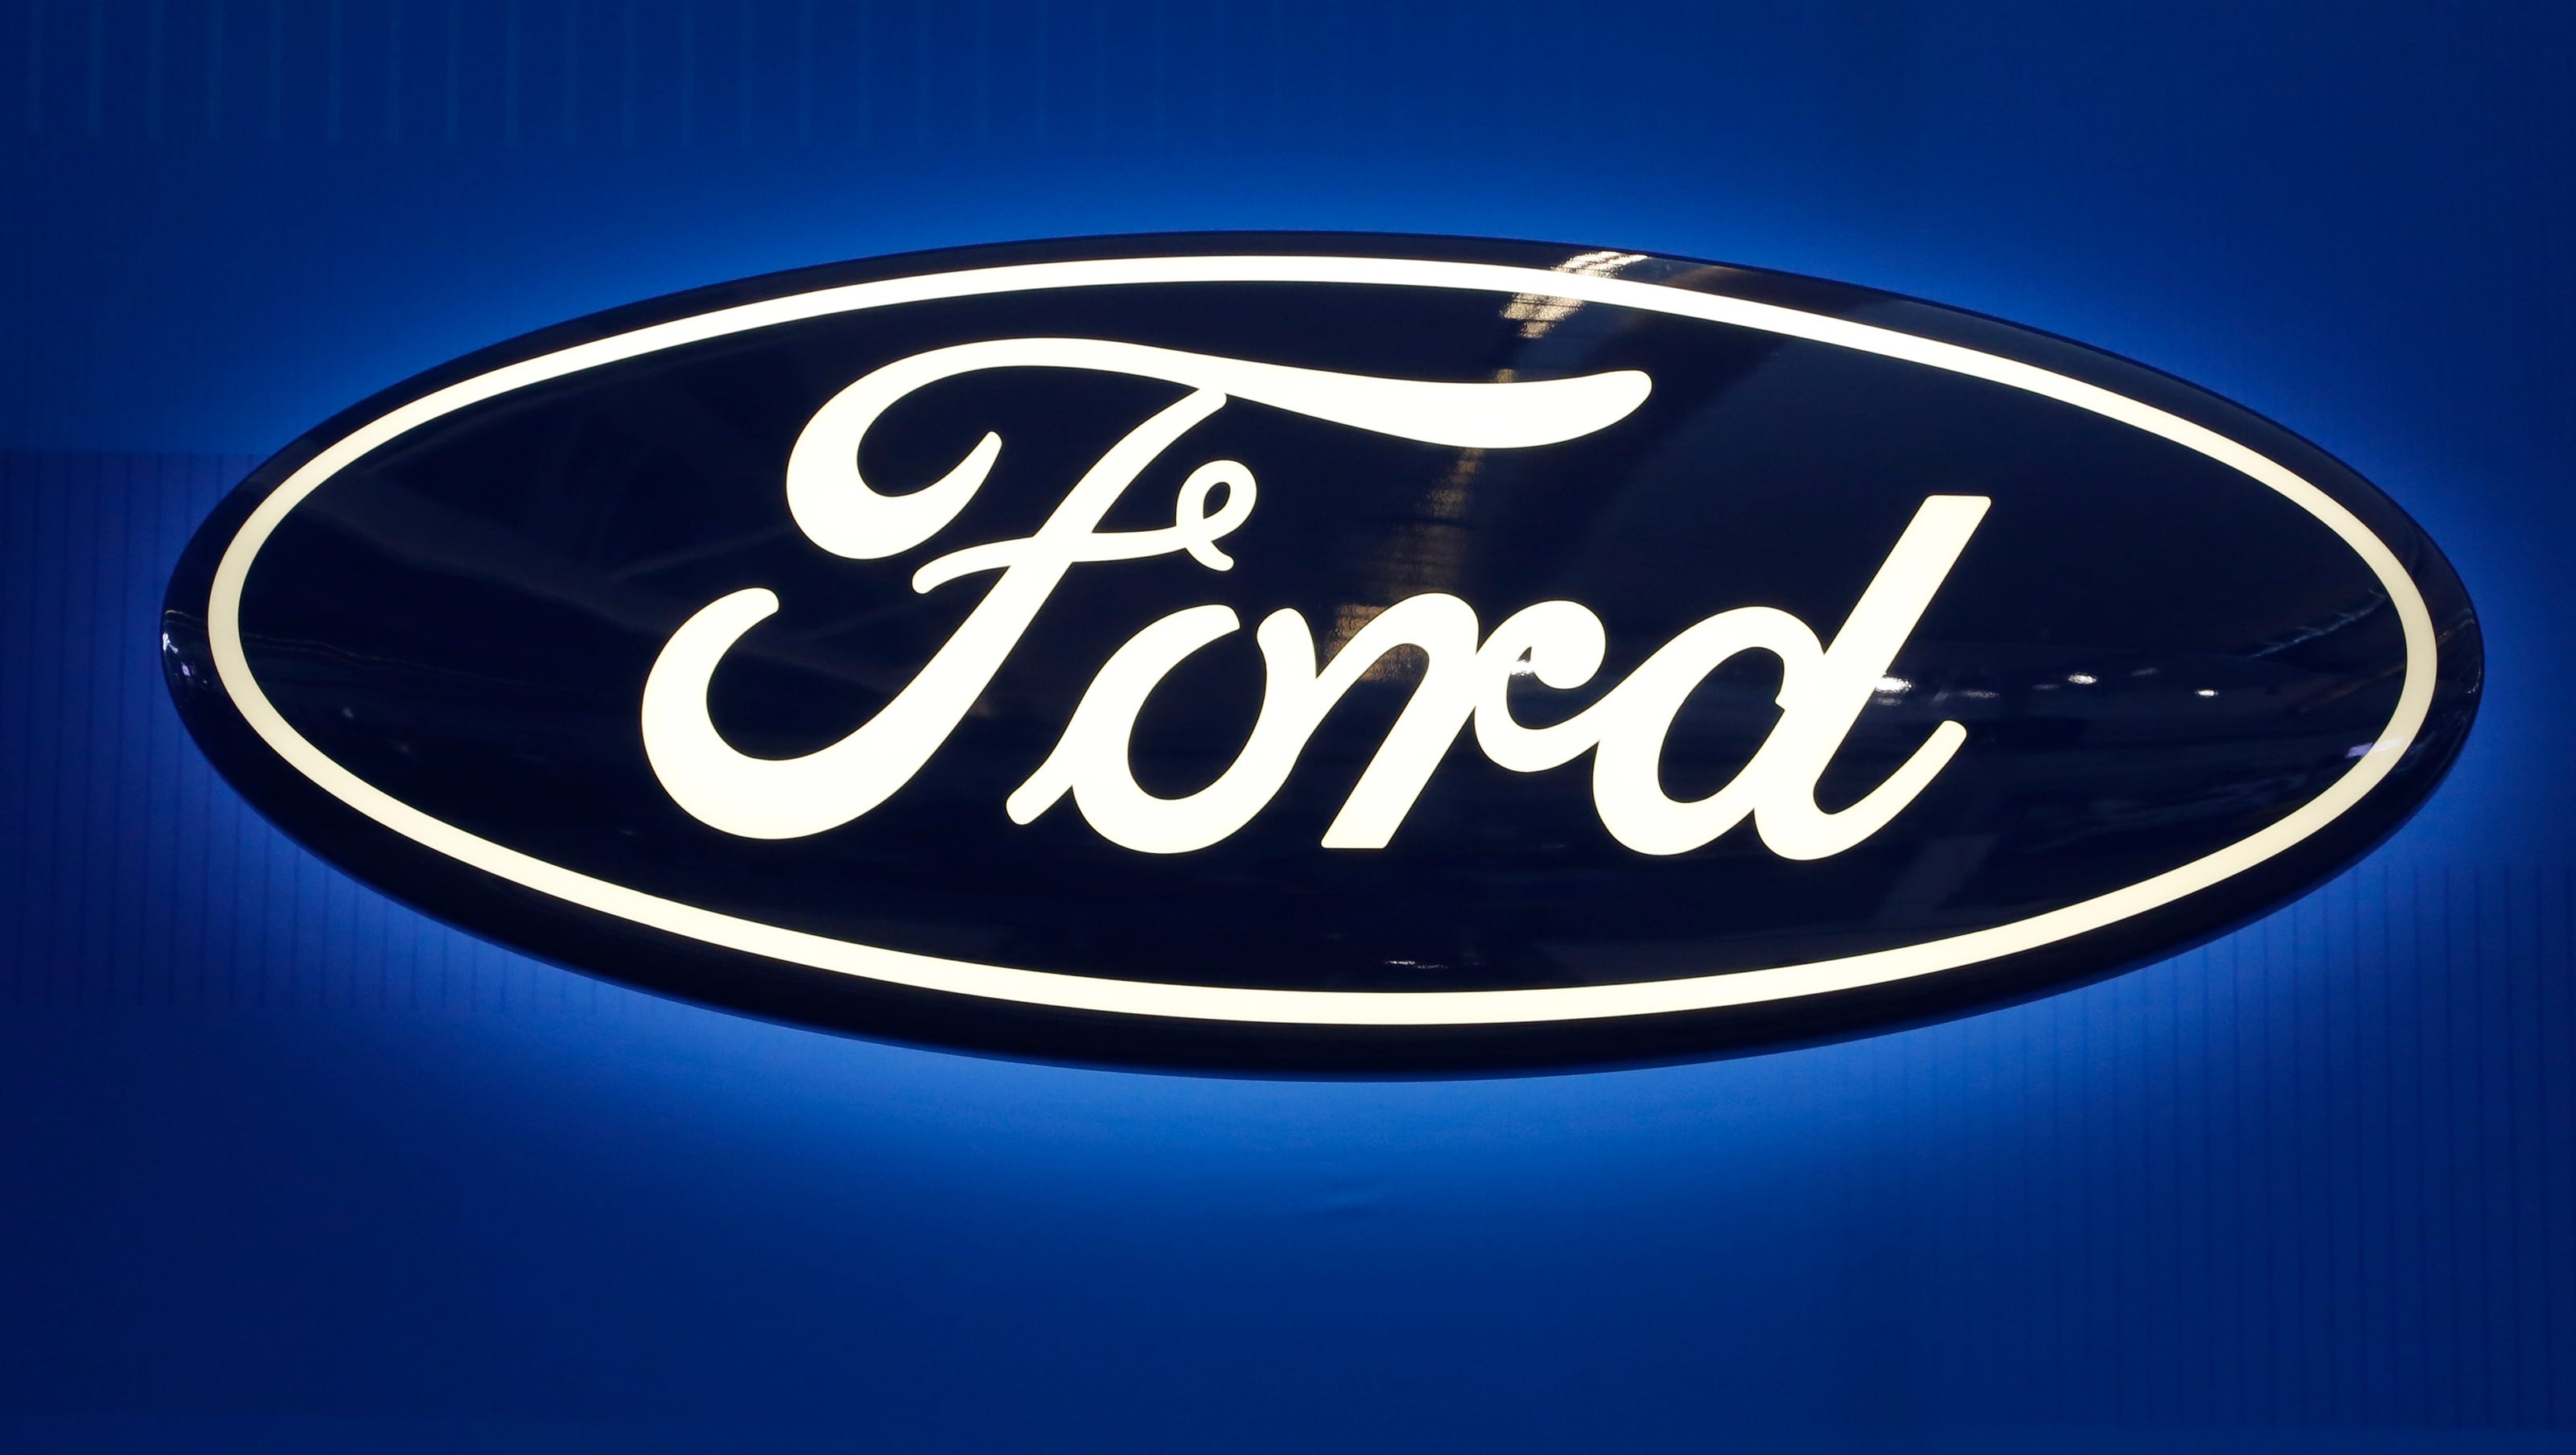 Форд моторс производитель. Ford Motor Company logo. Ford Motor Company 1903. 1903 — Основана «the Ford Motor Company».. Ford Motor Company (1903) логотип.